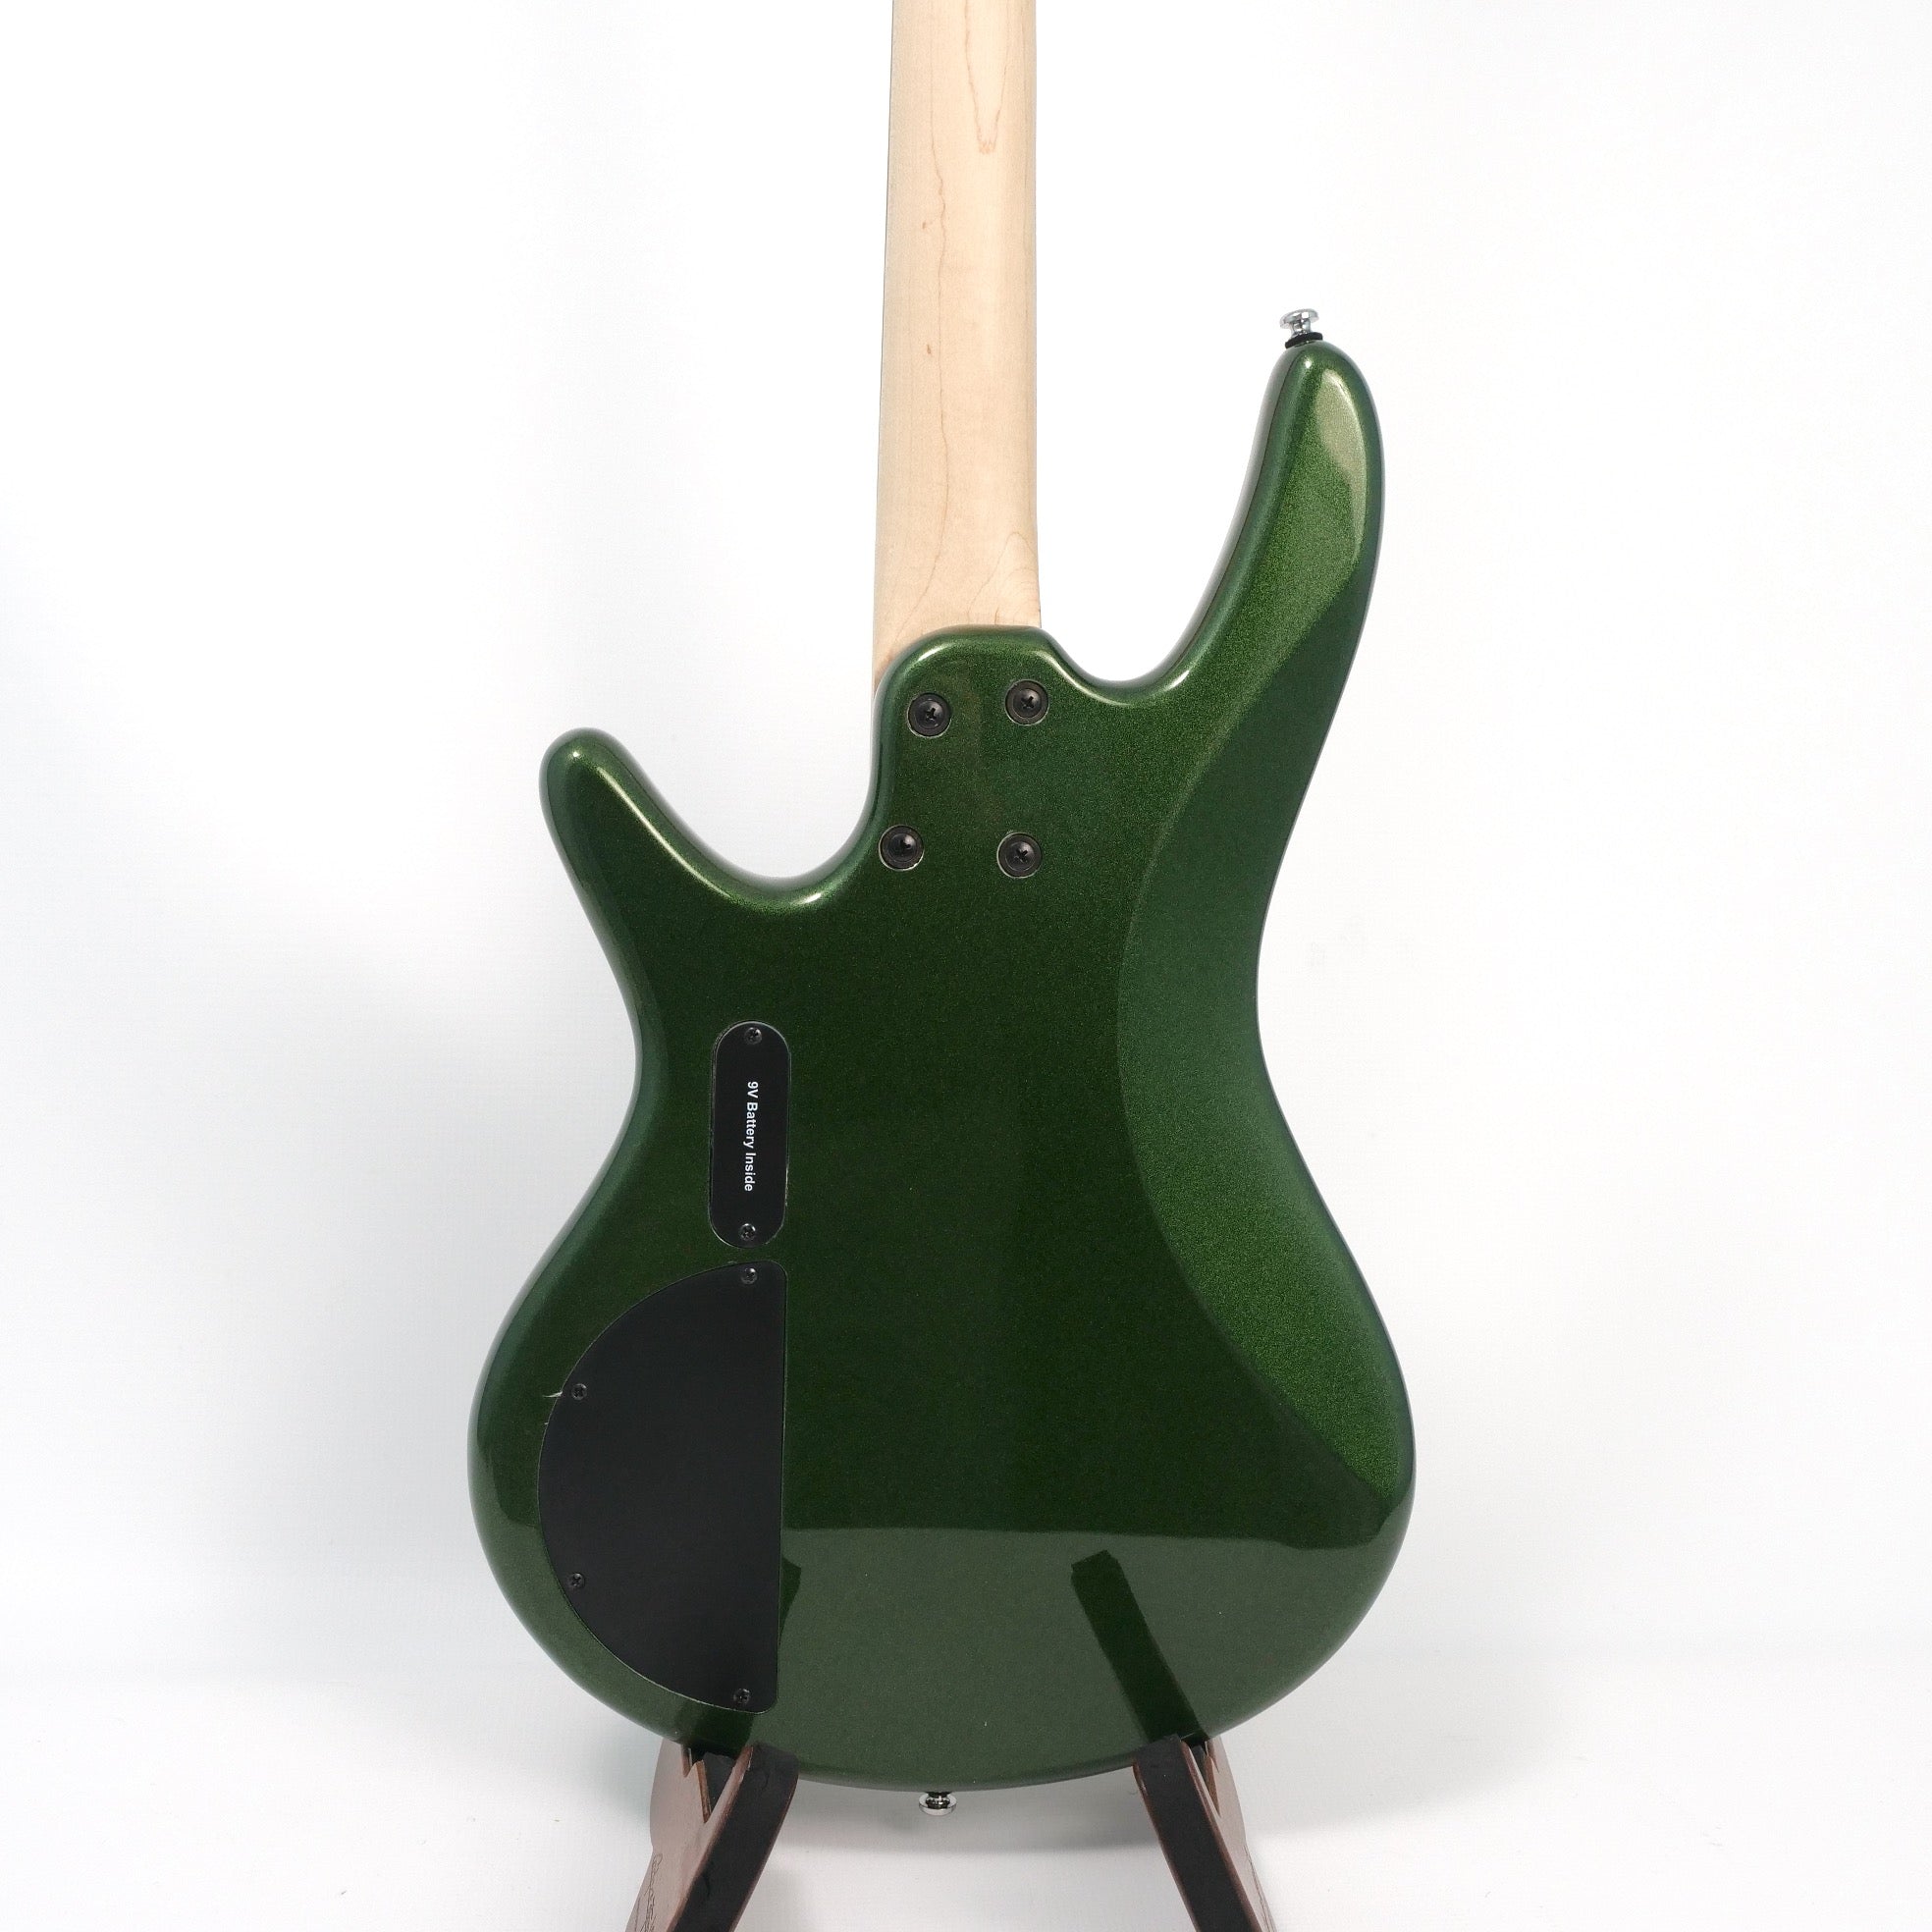 Ibanez SRMD200DMFT 4-String Bass Guitar - Metallic Forest Green Body Back